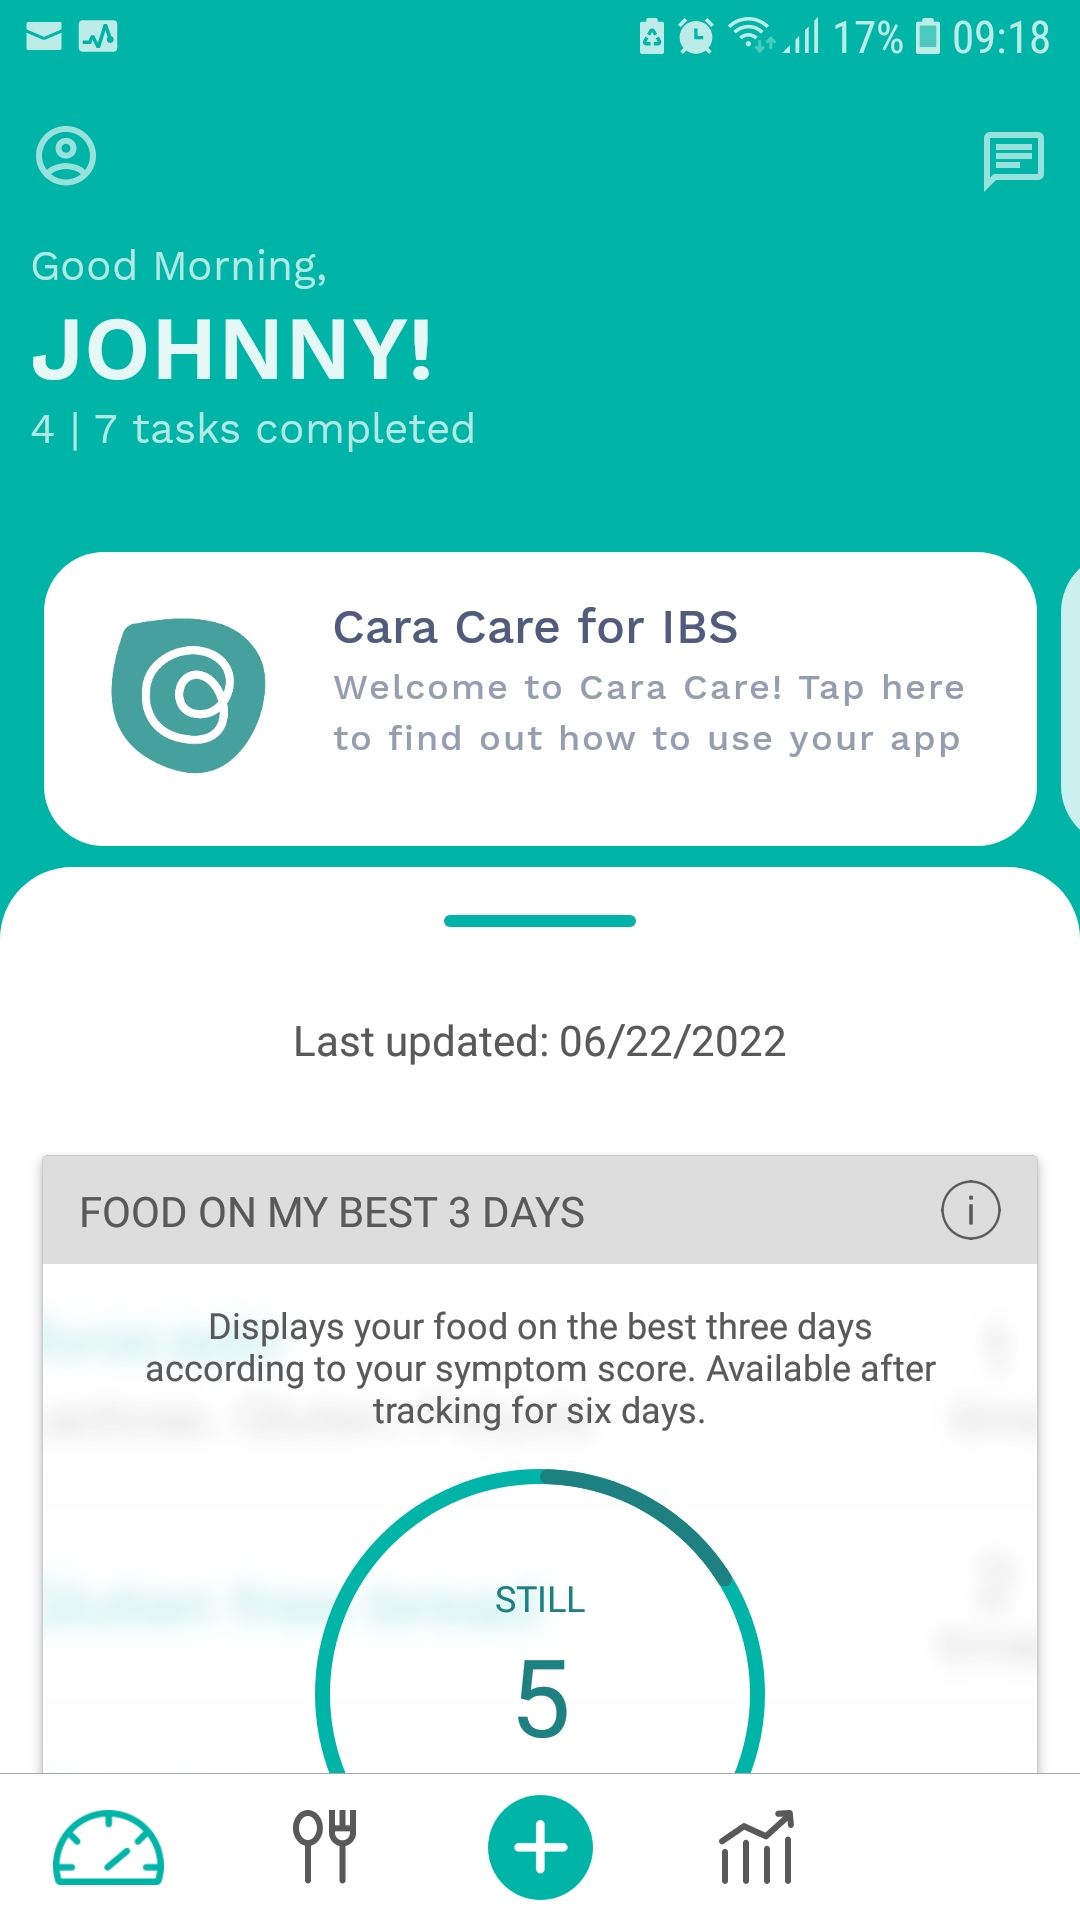 Cara Care mobile IBS app